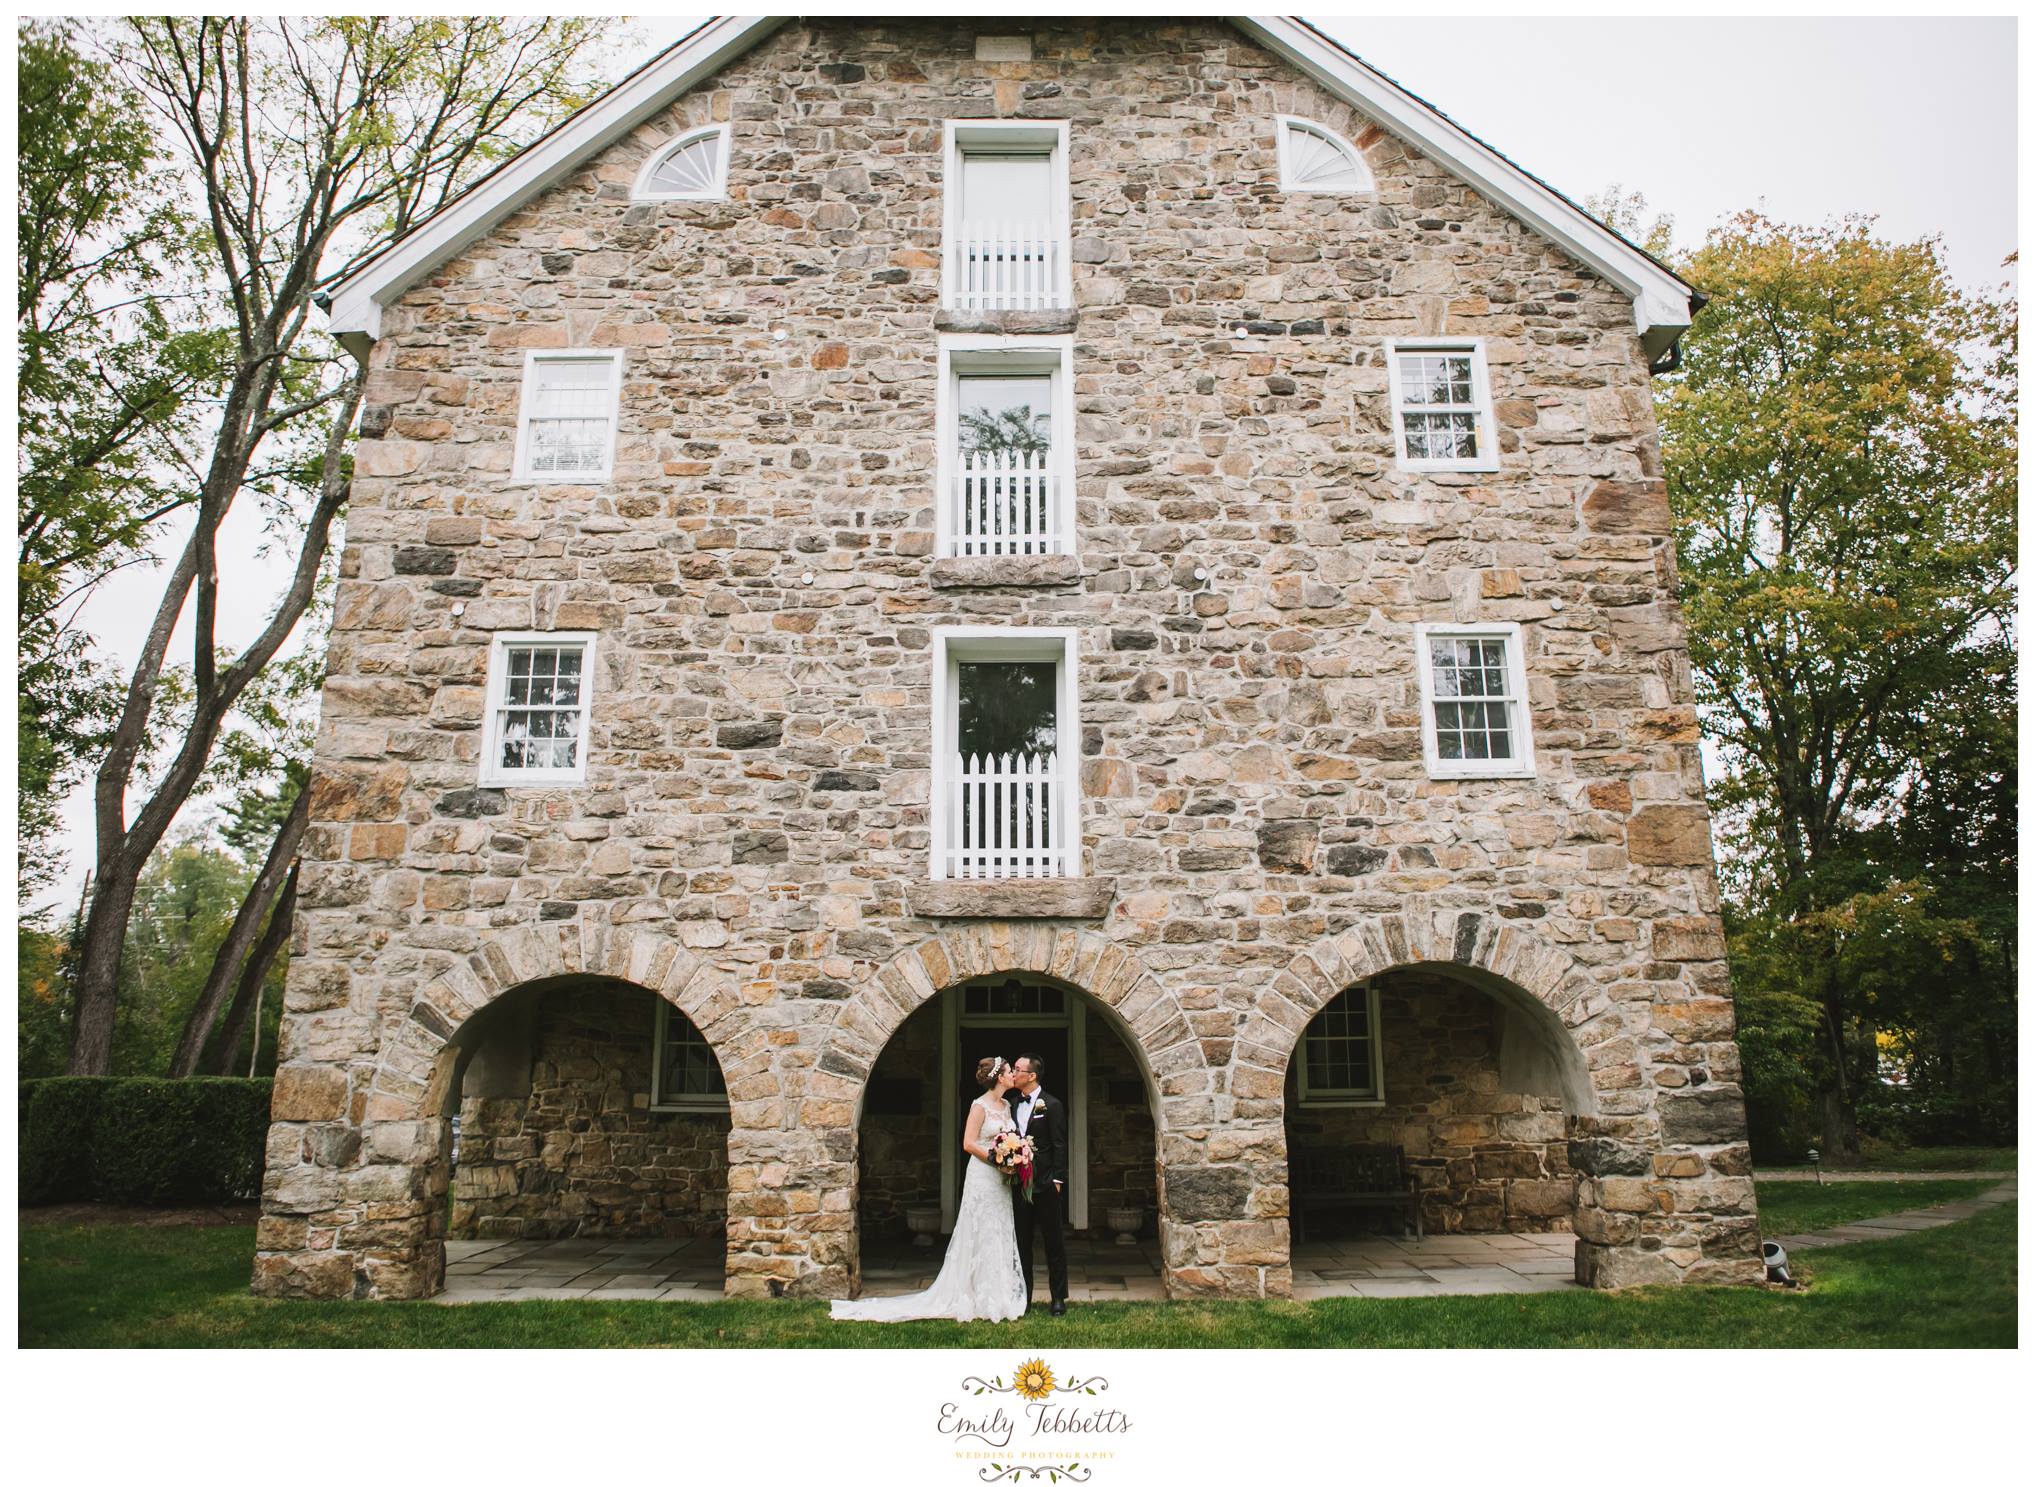 Basking Ridge, NJ - Emily Tebbetts Wedding Photography 2.jpg